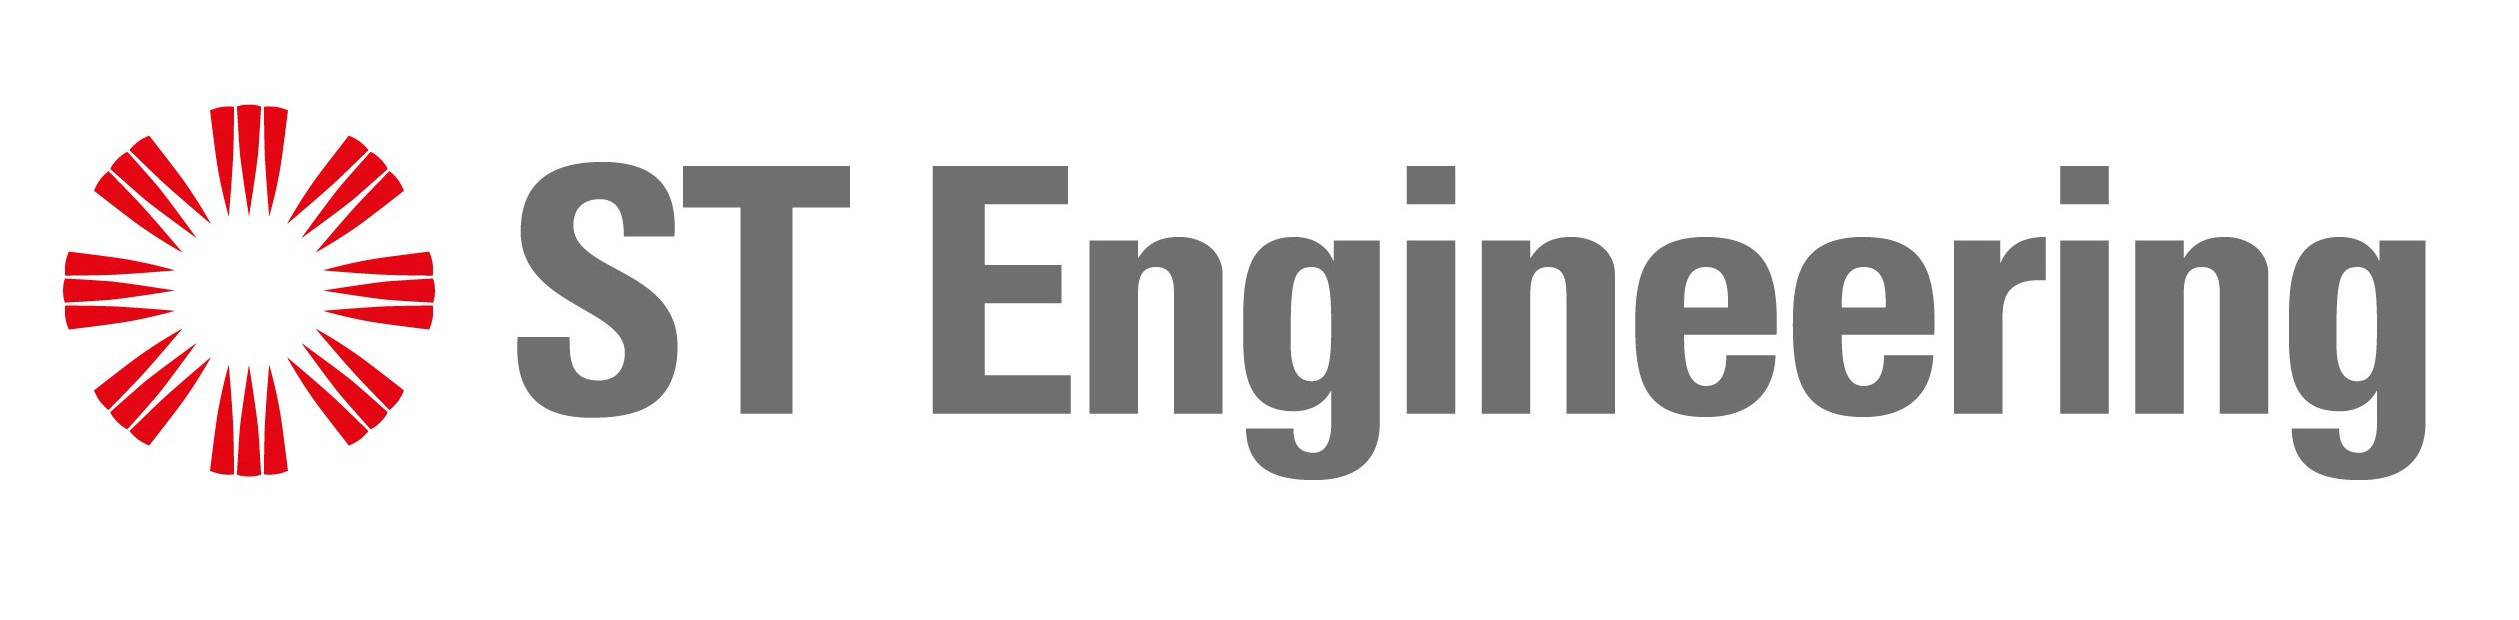 St Engineering Marine Ltd. logo